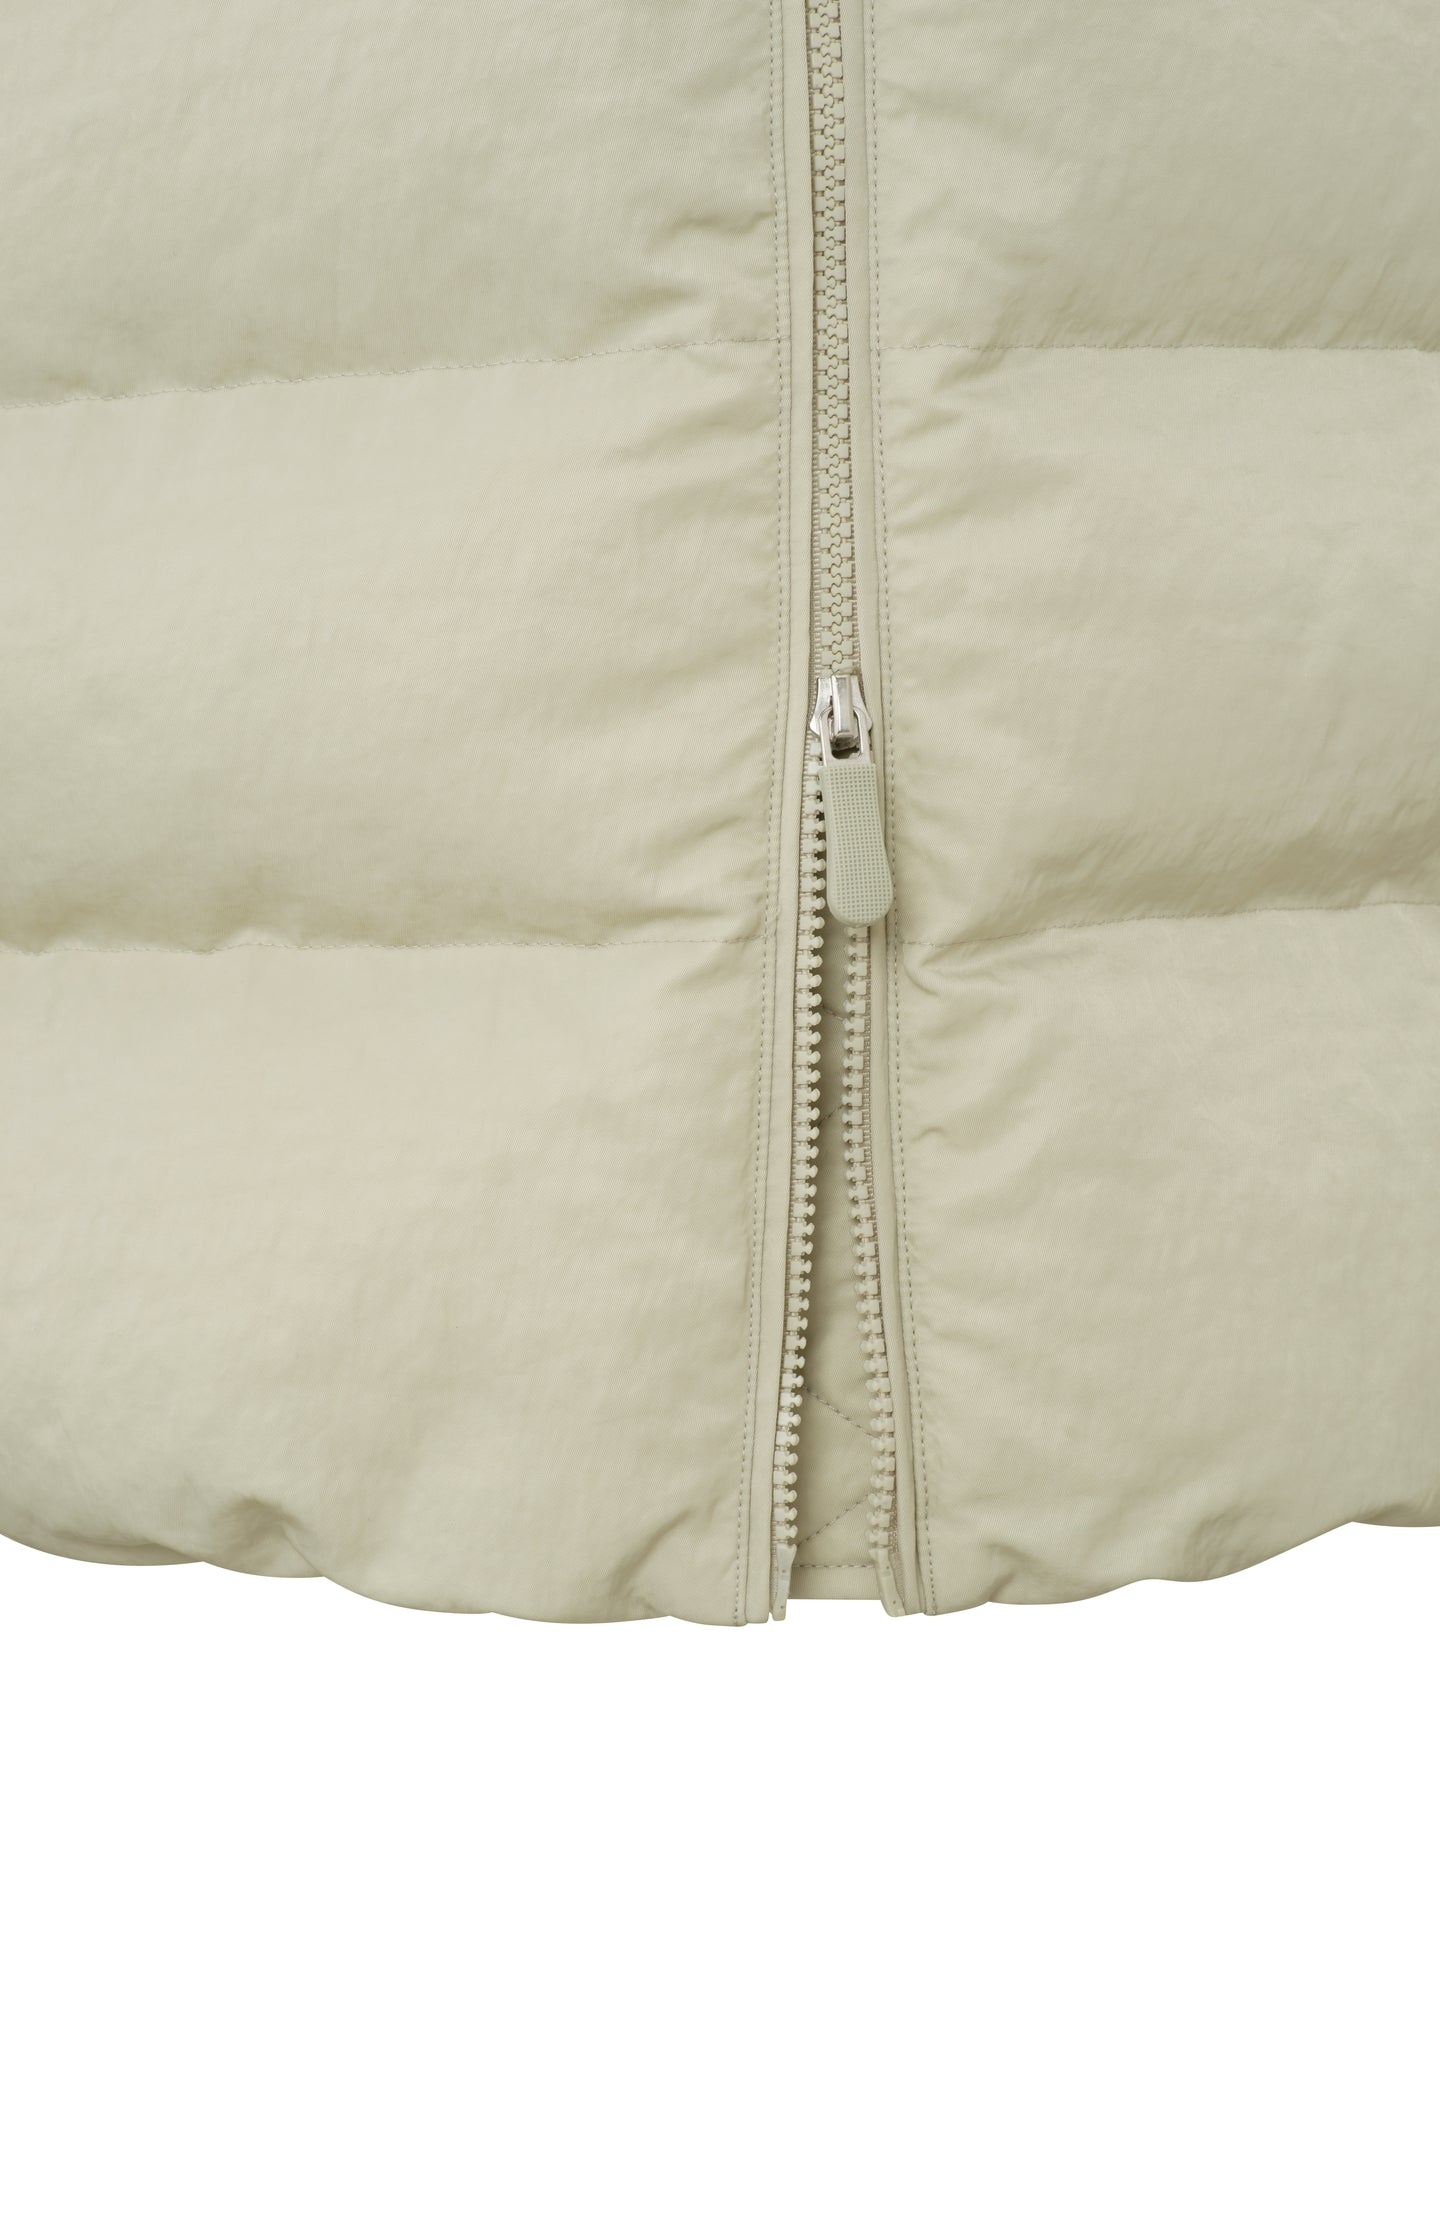 Sleeveless bomber jacket with pockets and zip closure